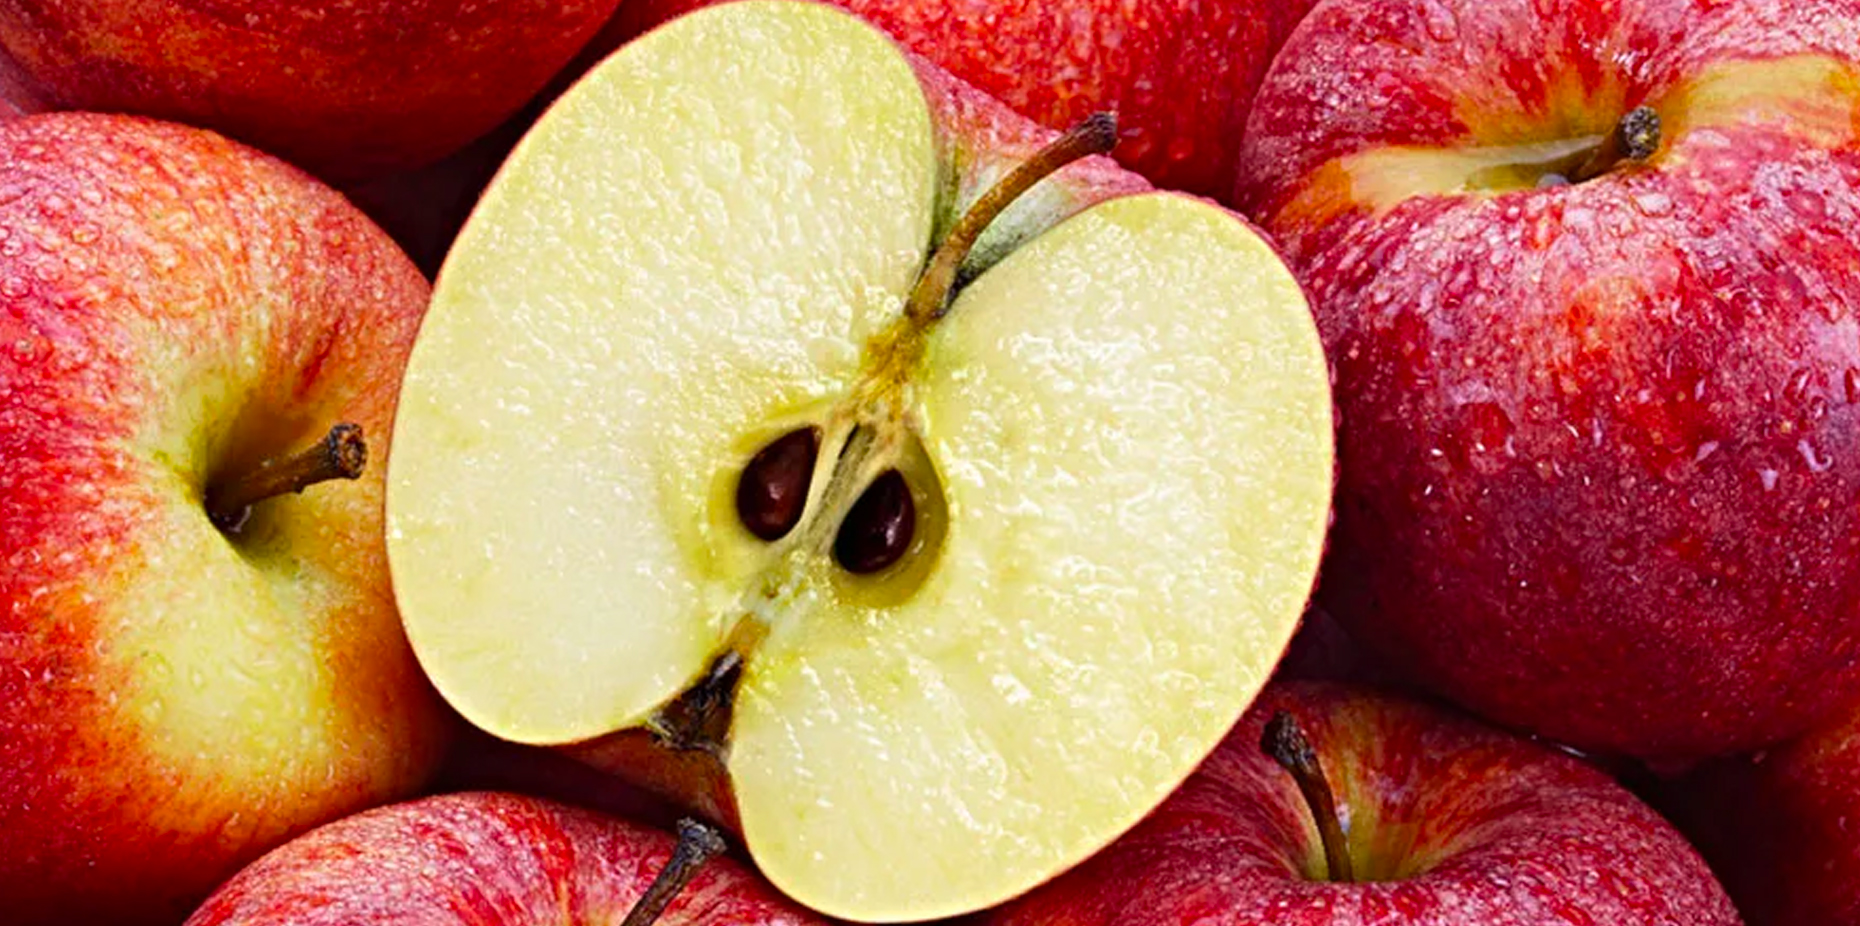 8 Health Benefits of Apples